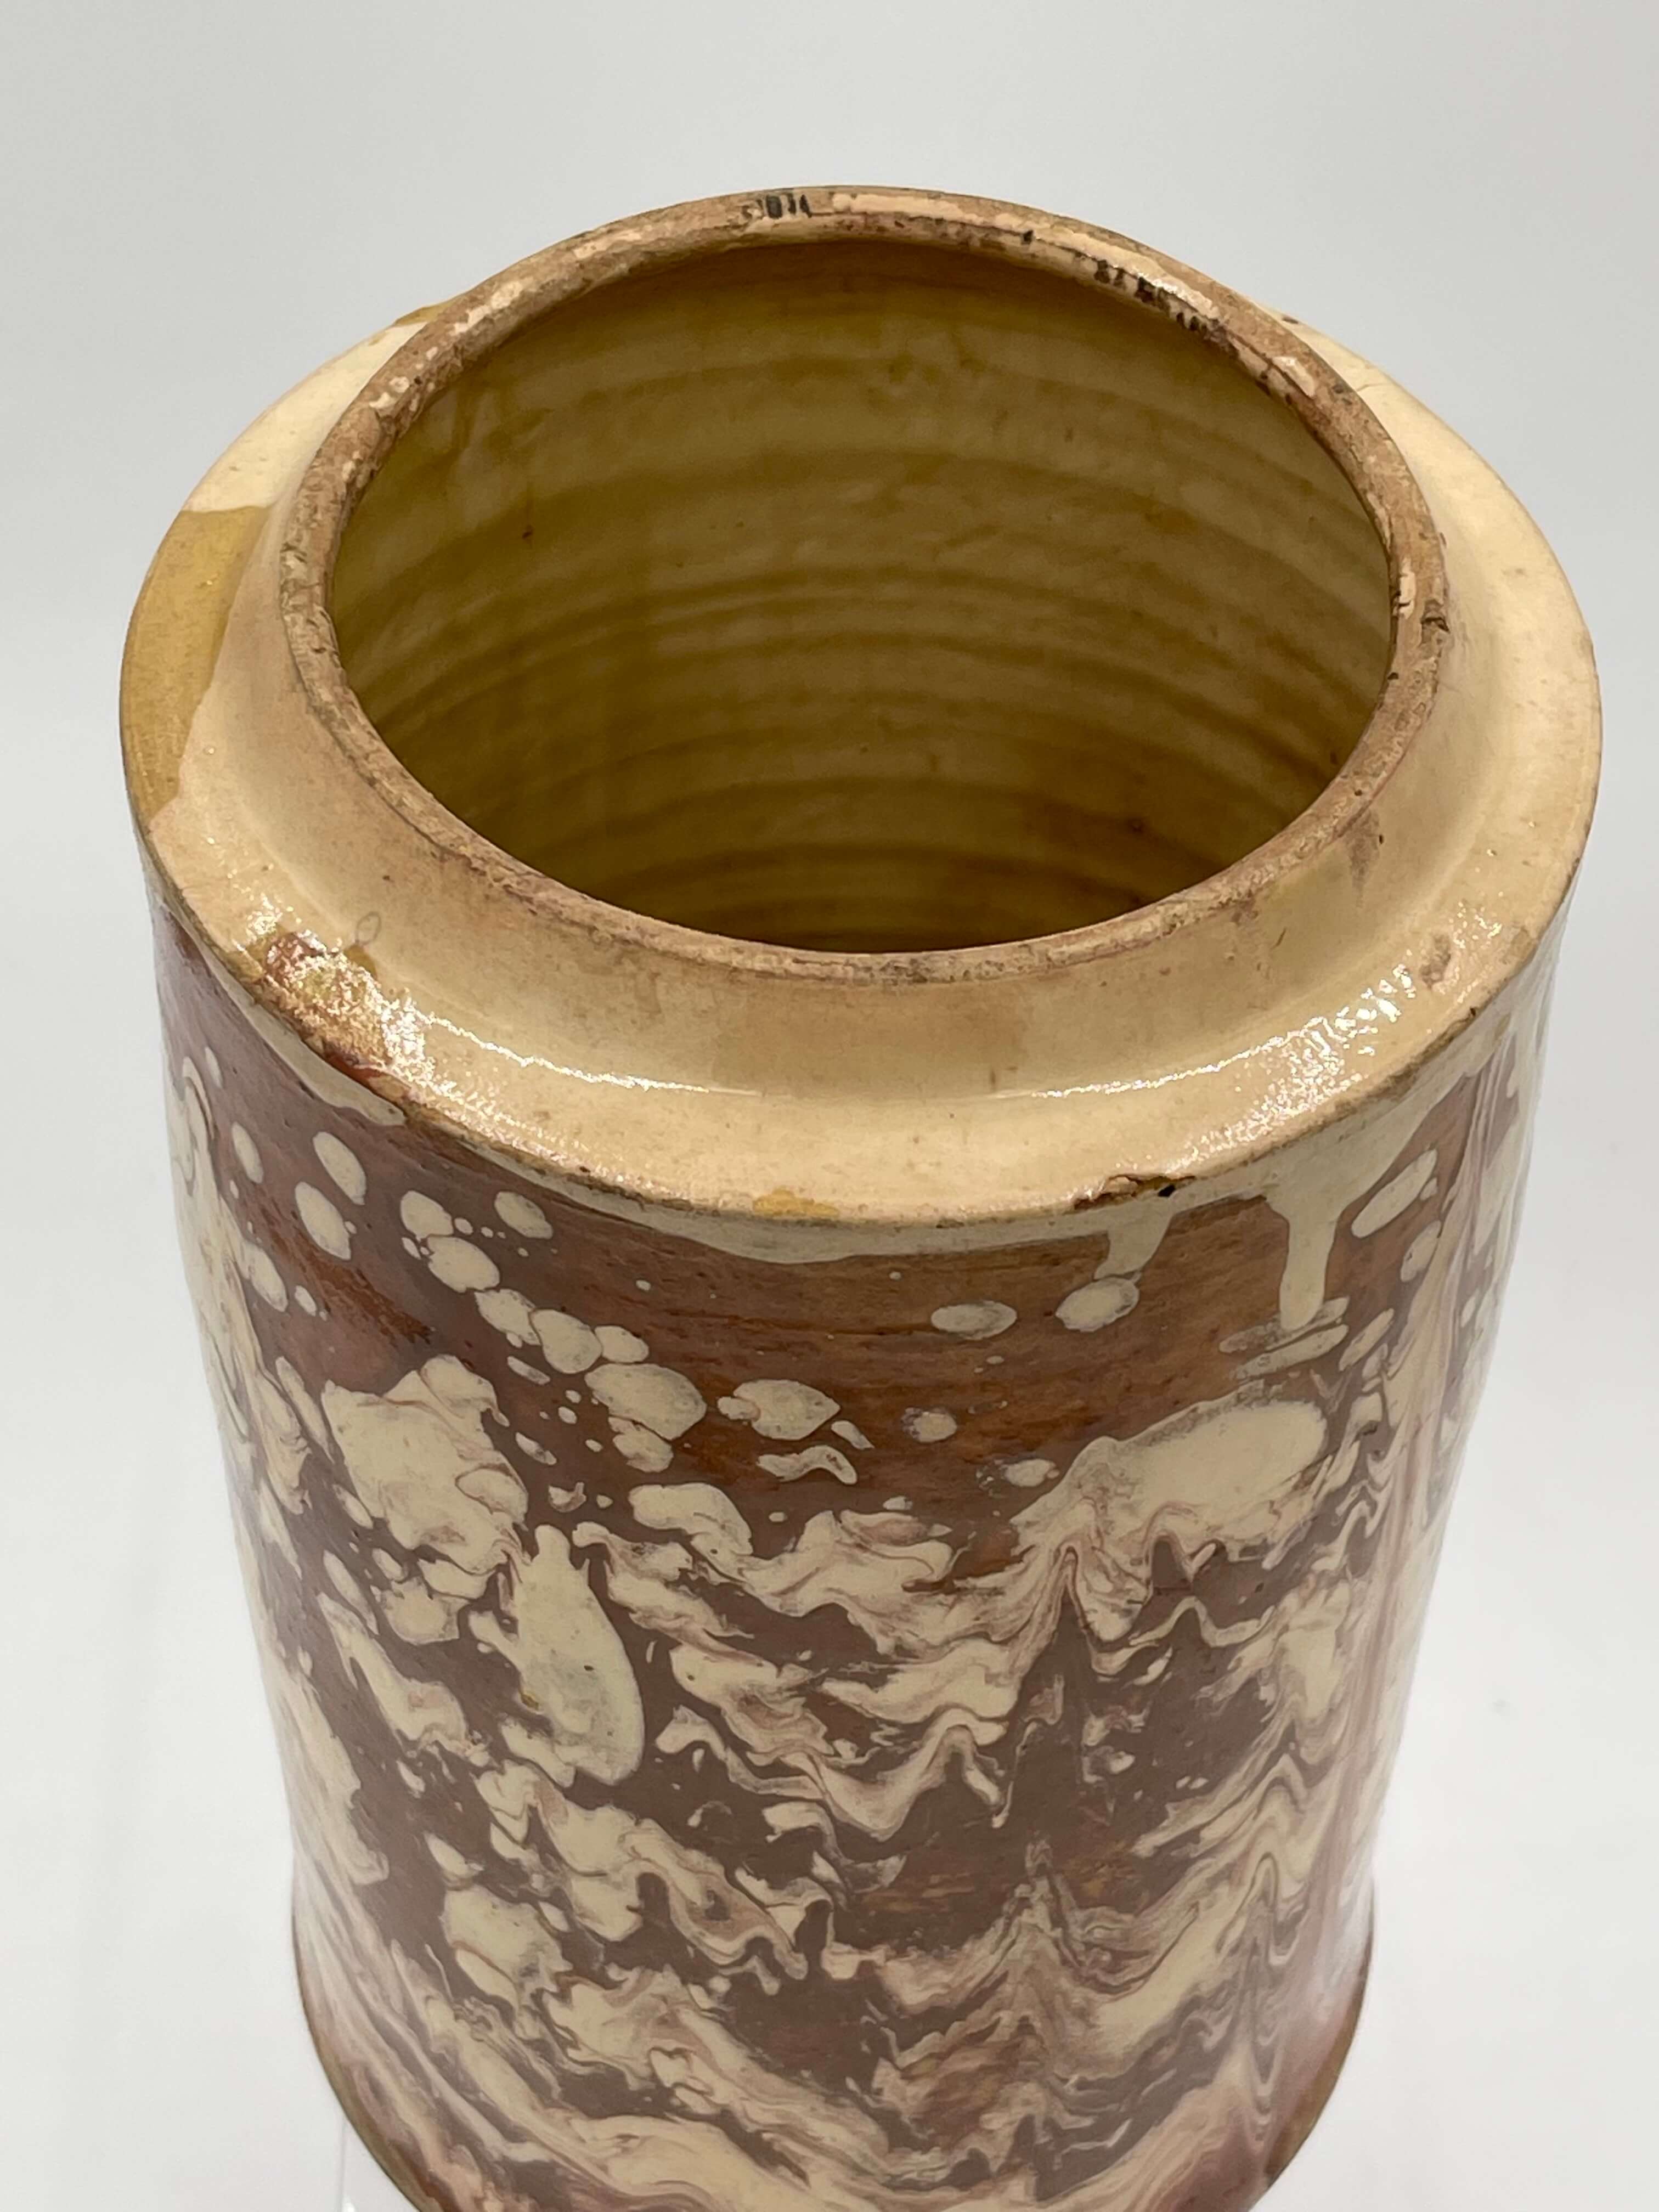 200+ year old ceramic vase with swirl/splatter glaze